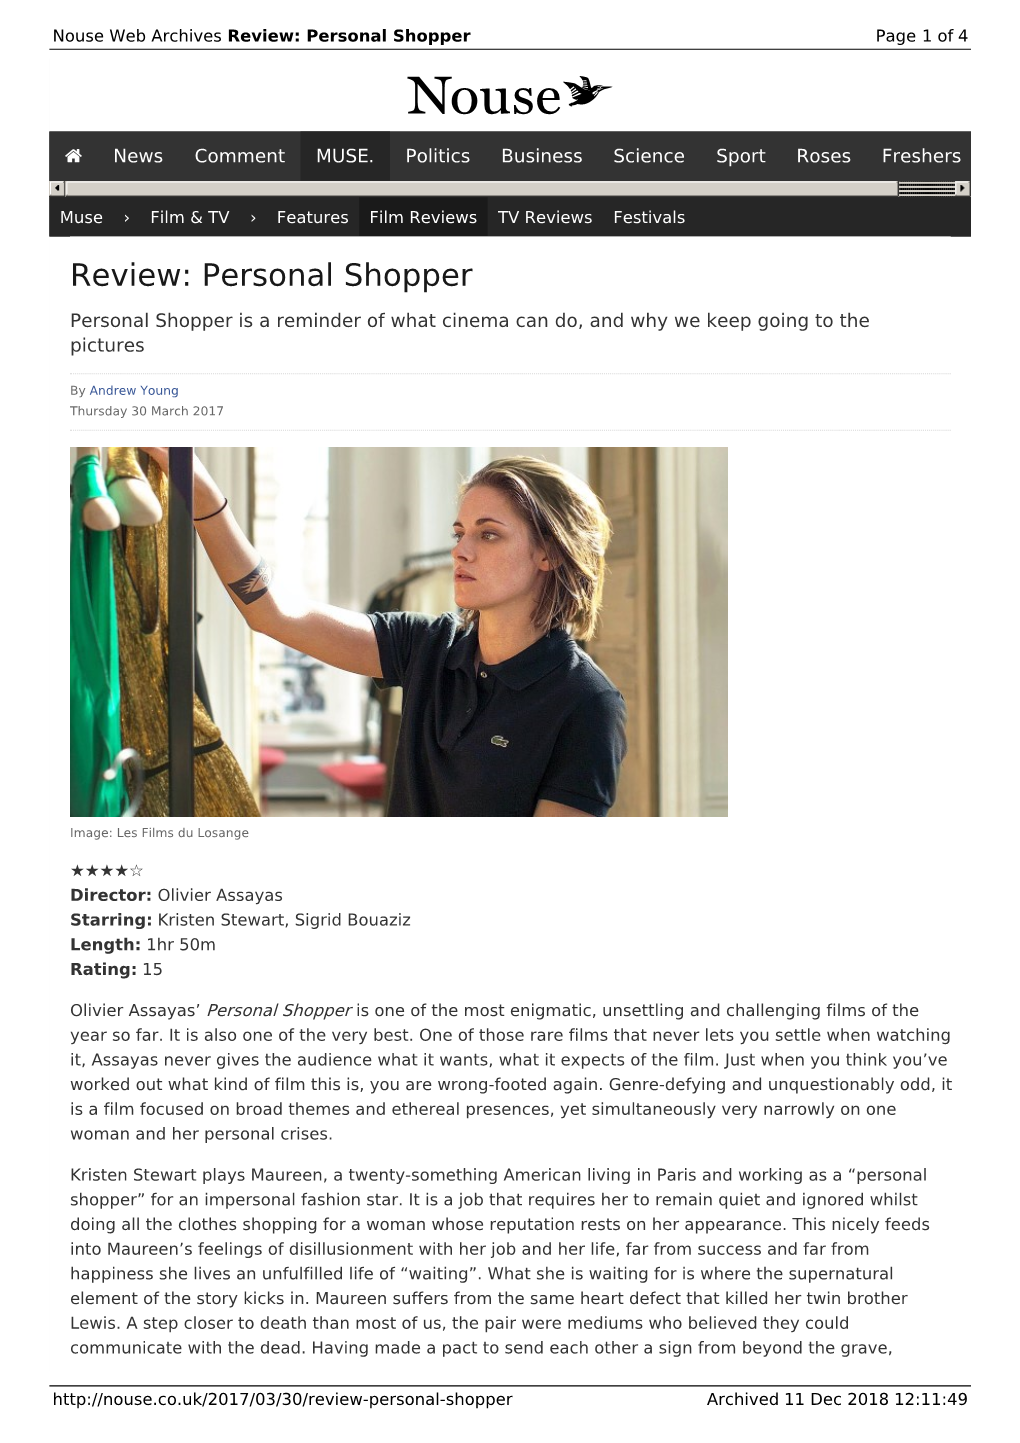 Review: Personal Shopper | Nouse